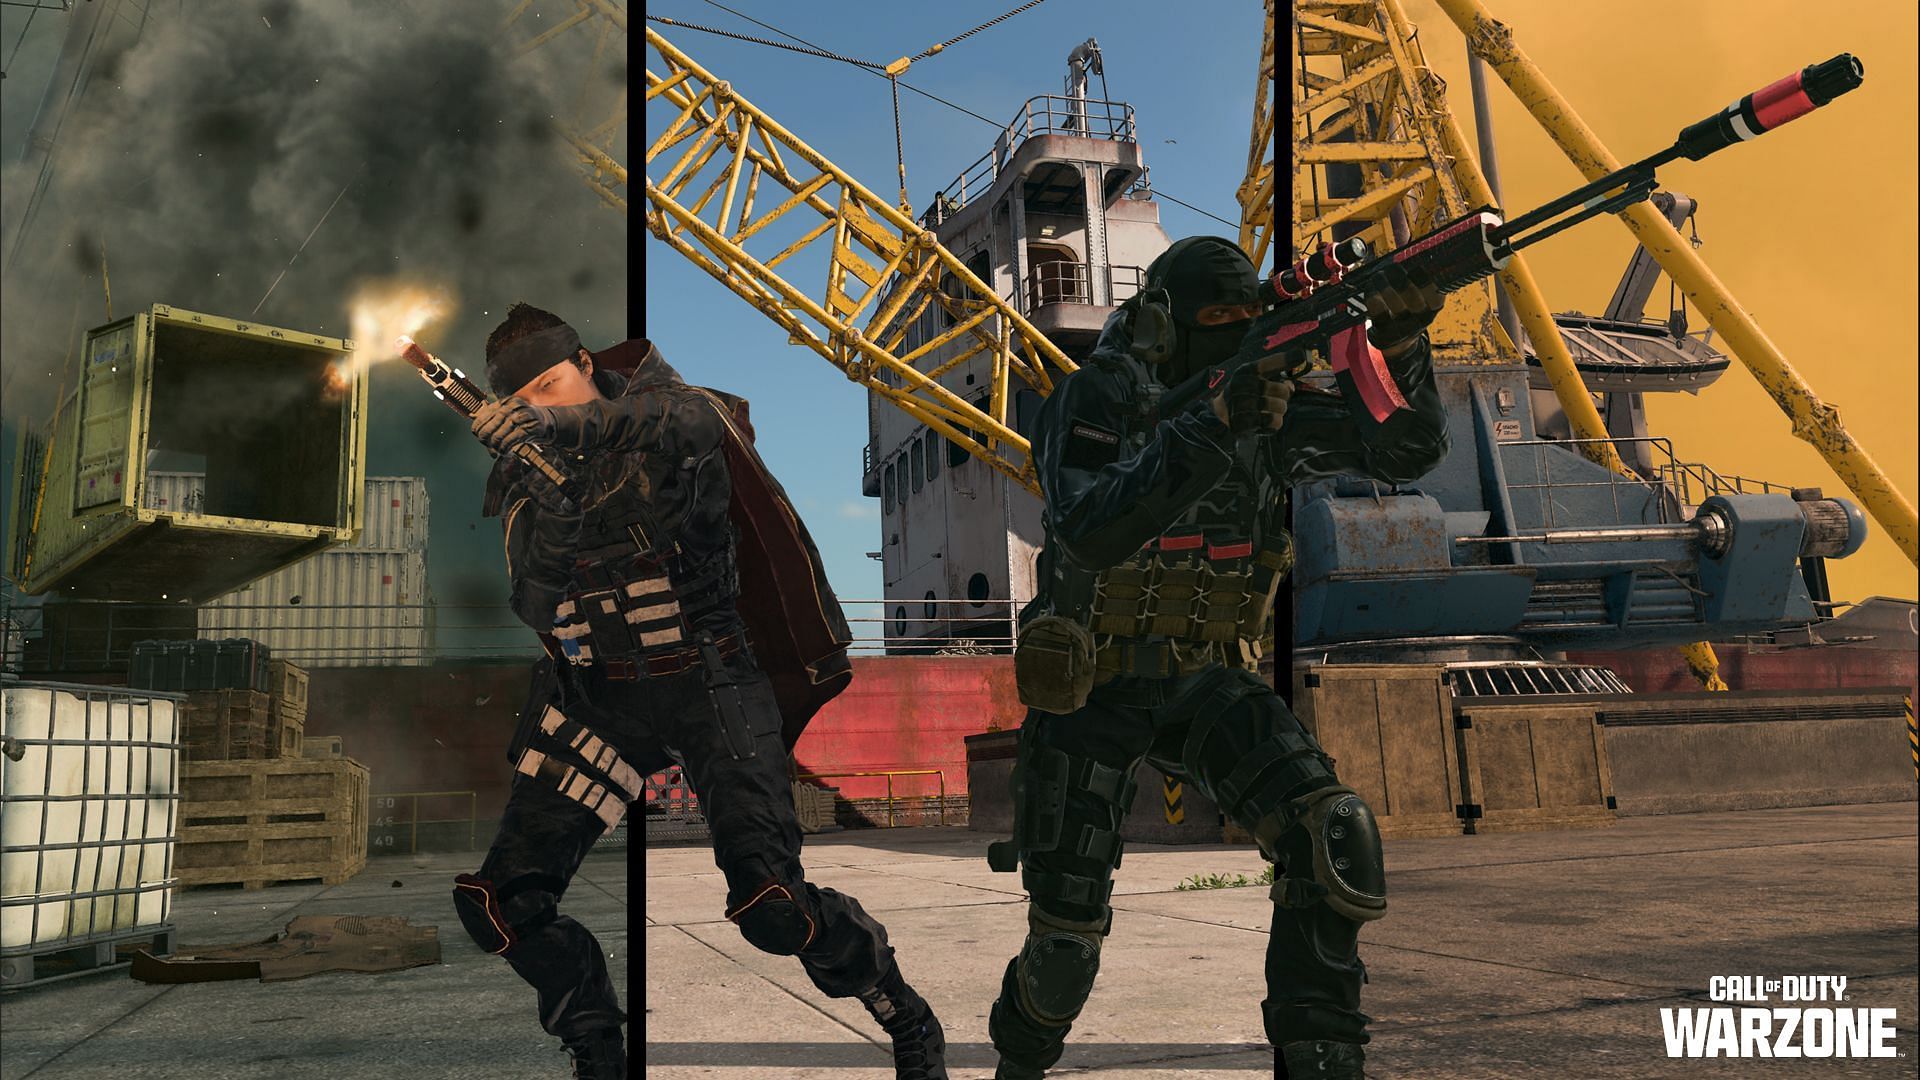 Two Operators side by side in Warzone